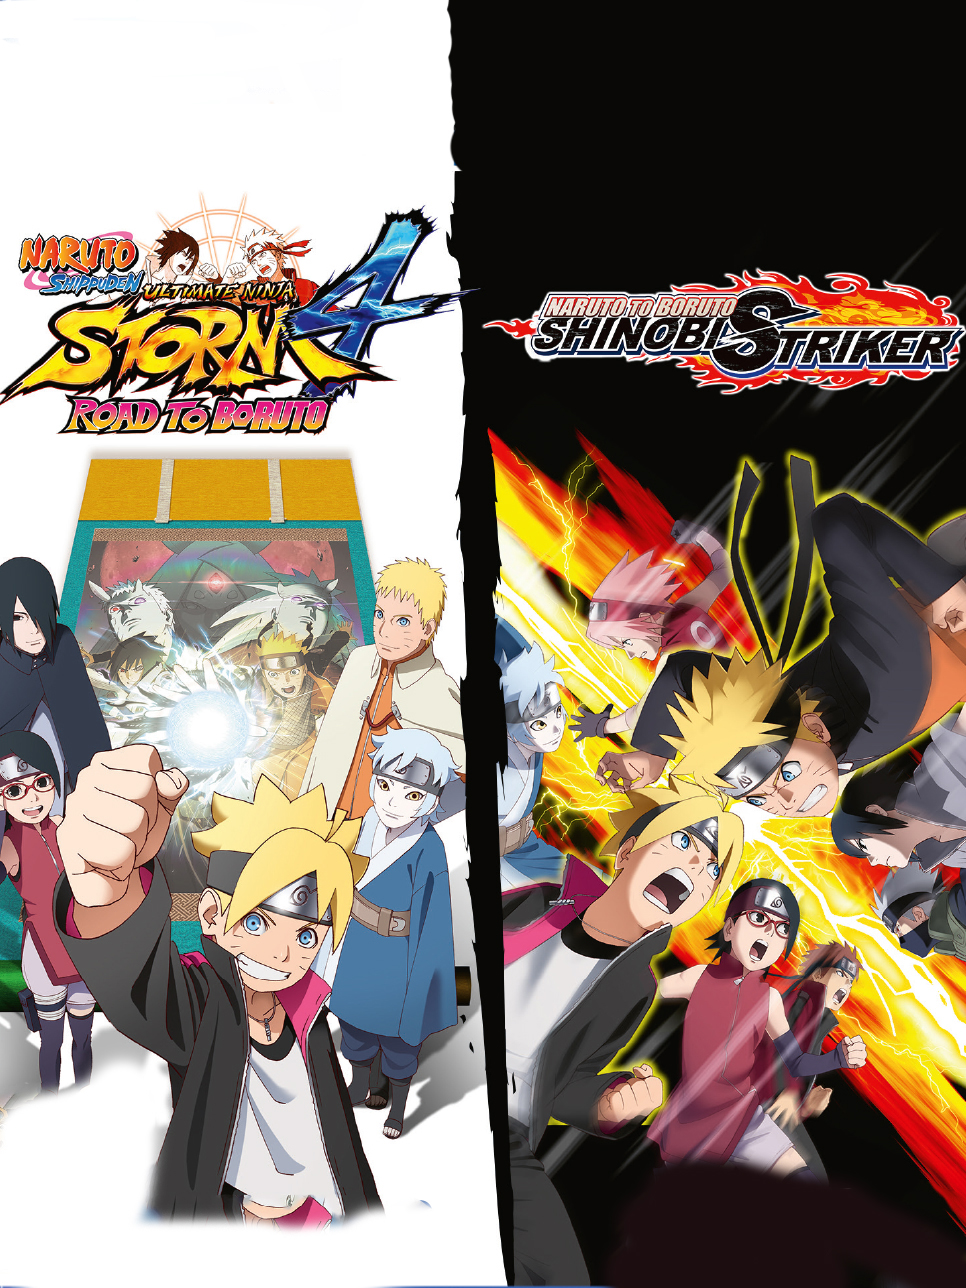 Naruto Shippuden: Ultimate Ninja Storm 4 - Road to Boruto Análise